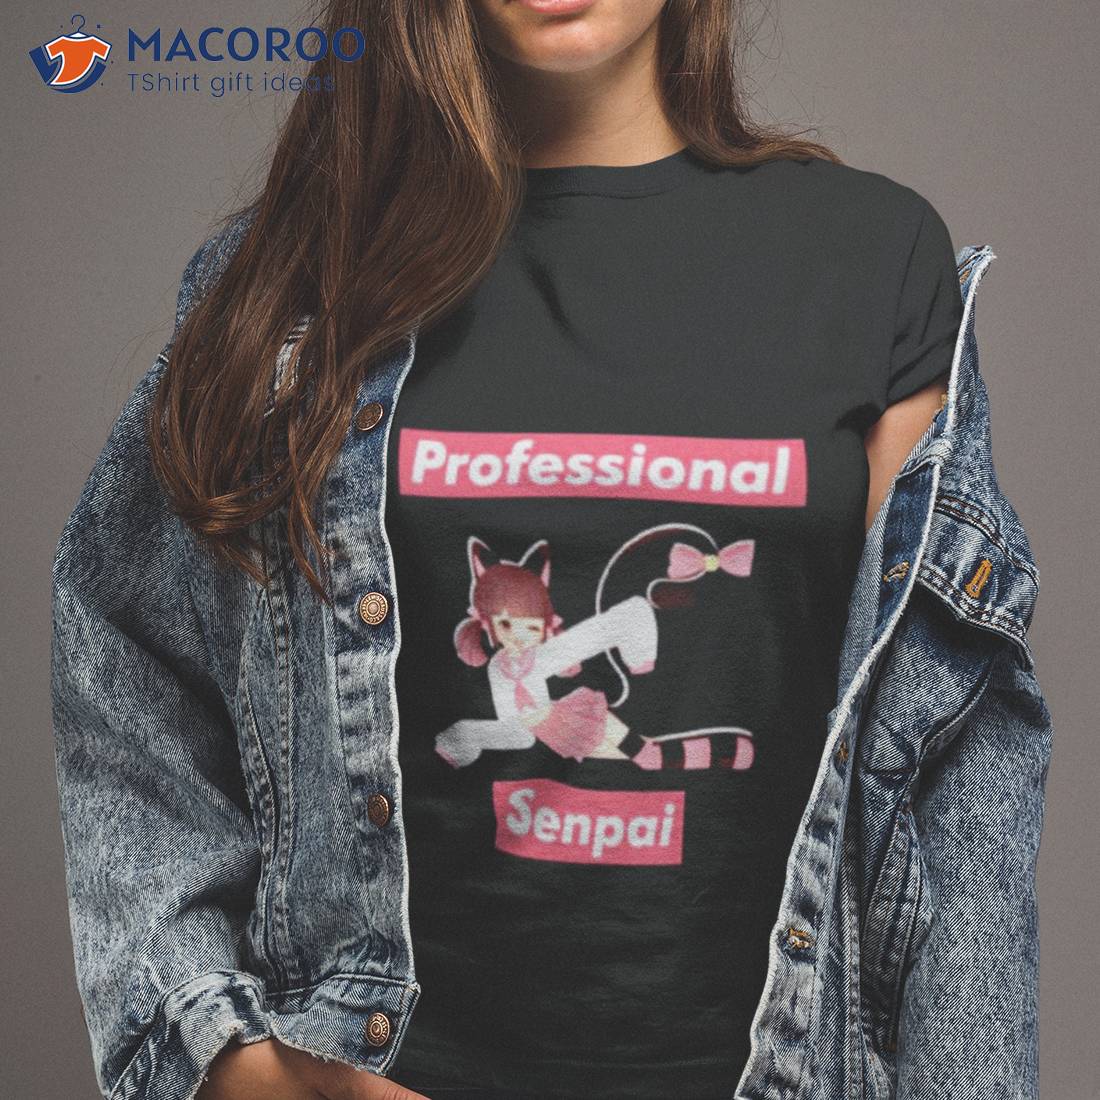 MeowBahh Merch MeowBahh Senpai T-Shirt Hoodie Long Sleeve Sweatshirt  Crewneck Novelty Unique Gift For Boys Girls Women Men Kids All Size, Black,  Small : : Clothing, Shoes & Accessories